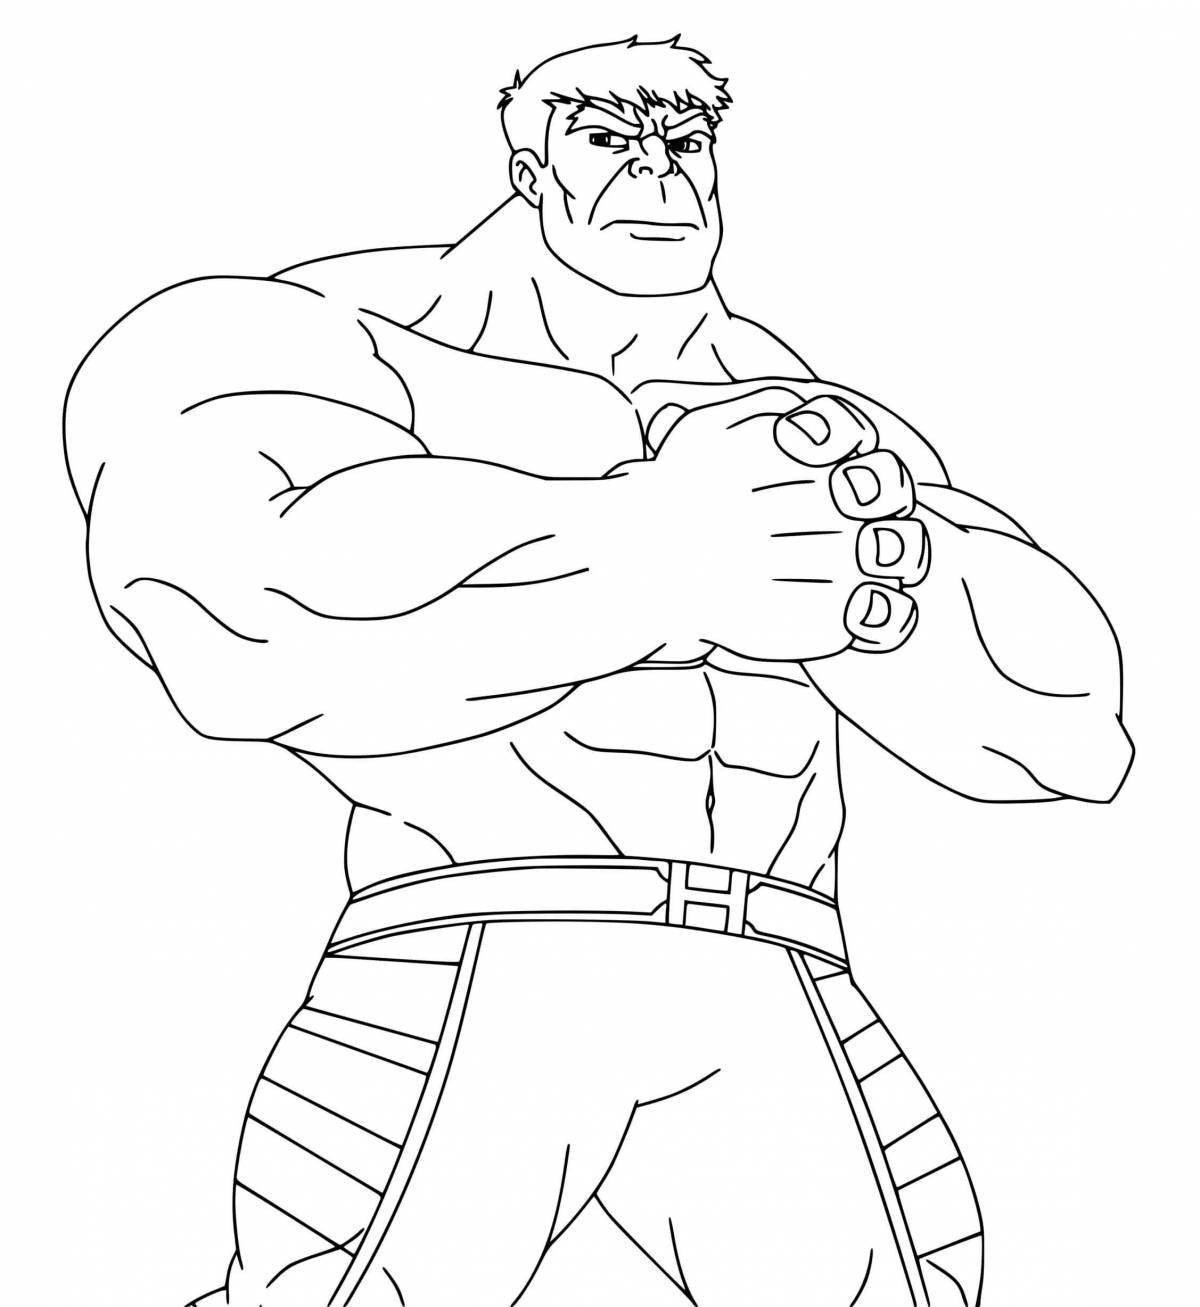 Hulk richly drawn coloring book